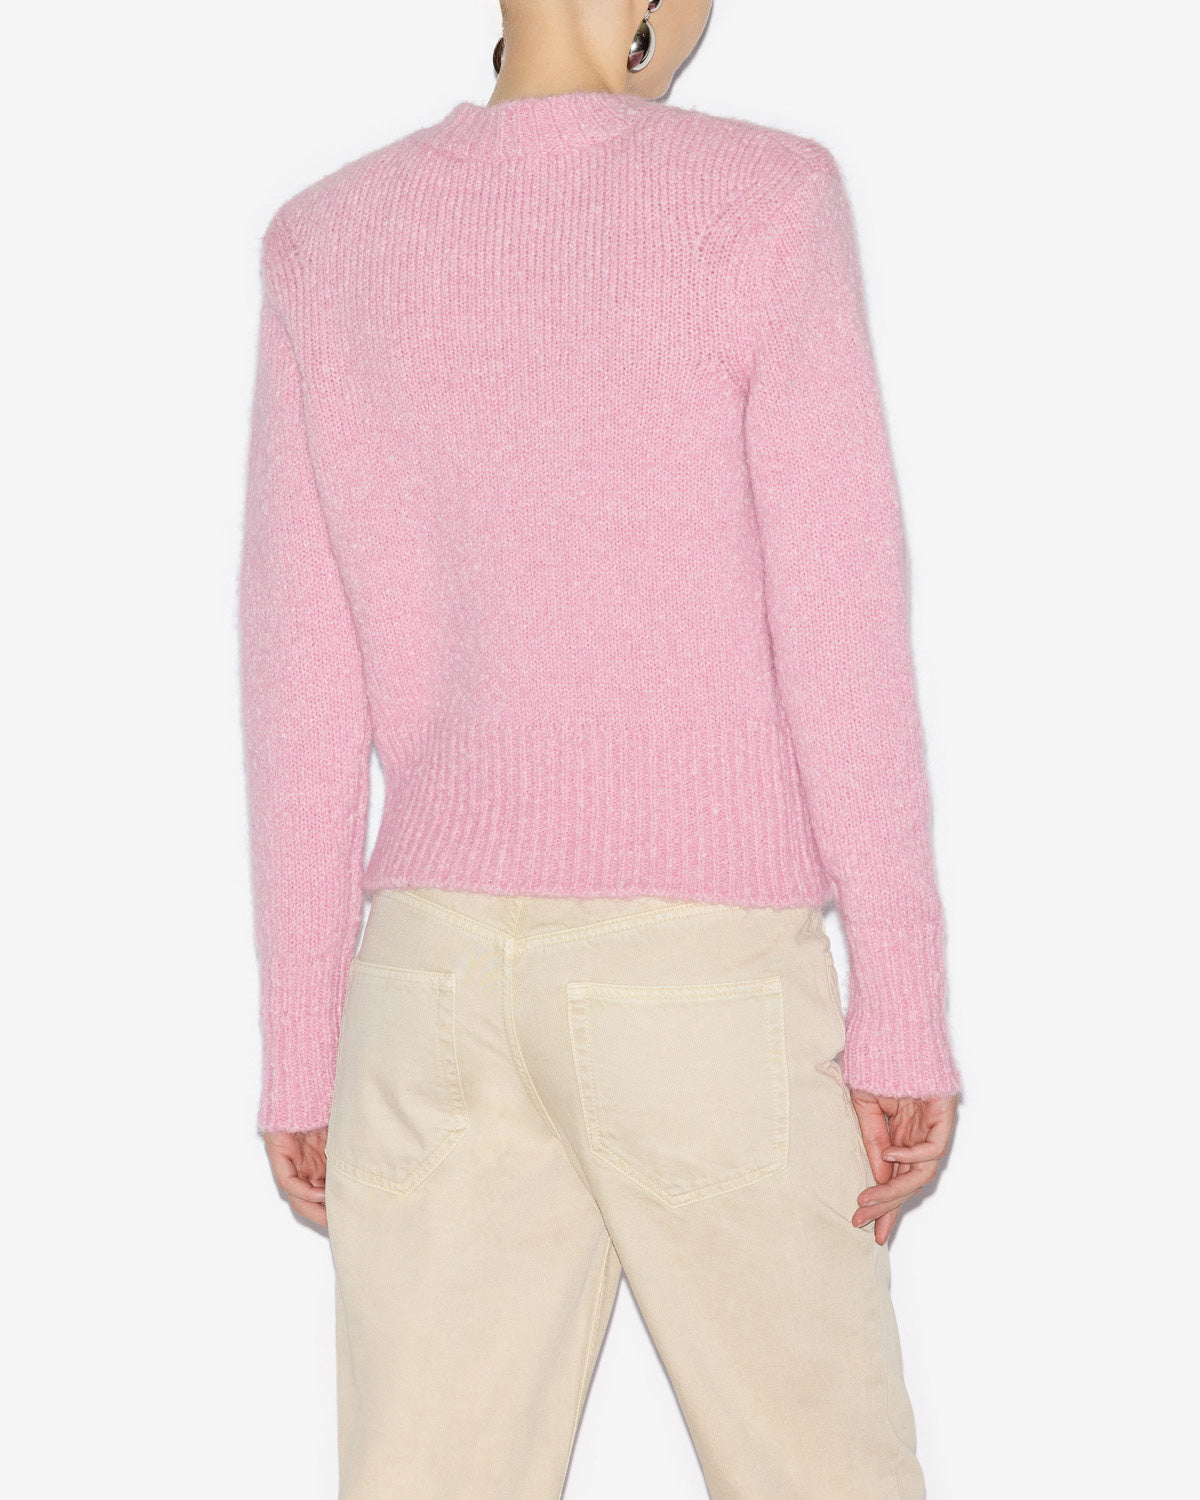 Kalo sweater Woman Light pink 3